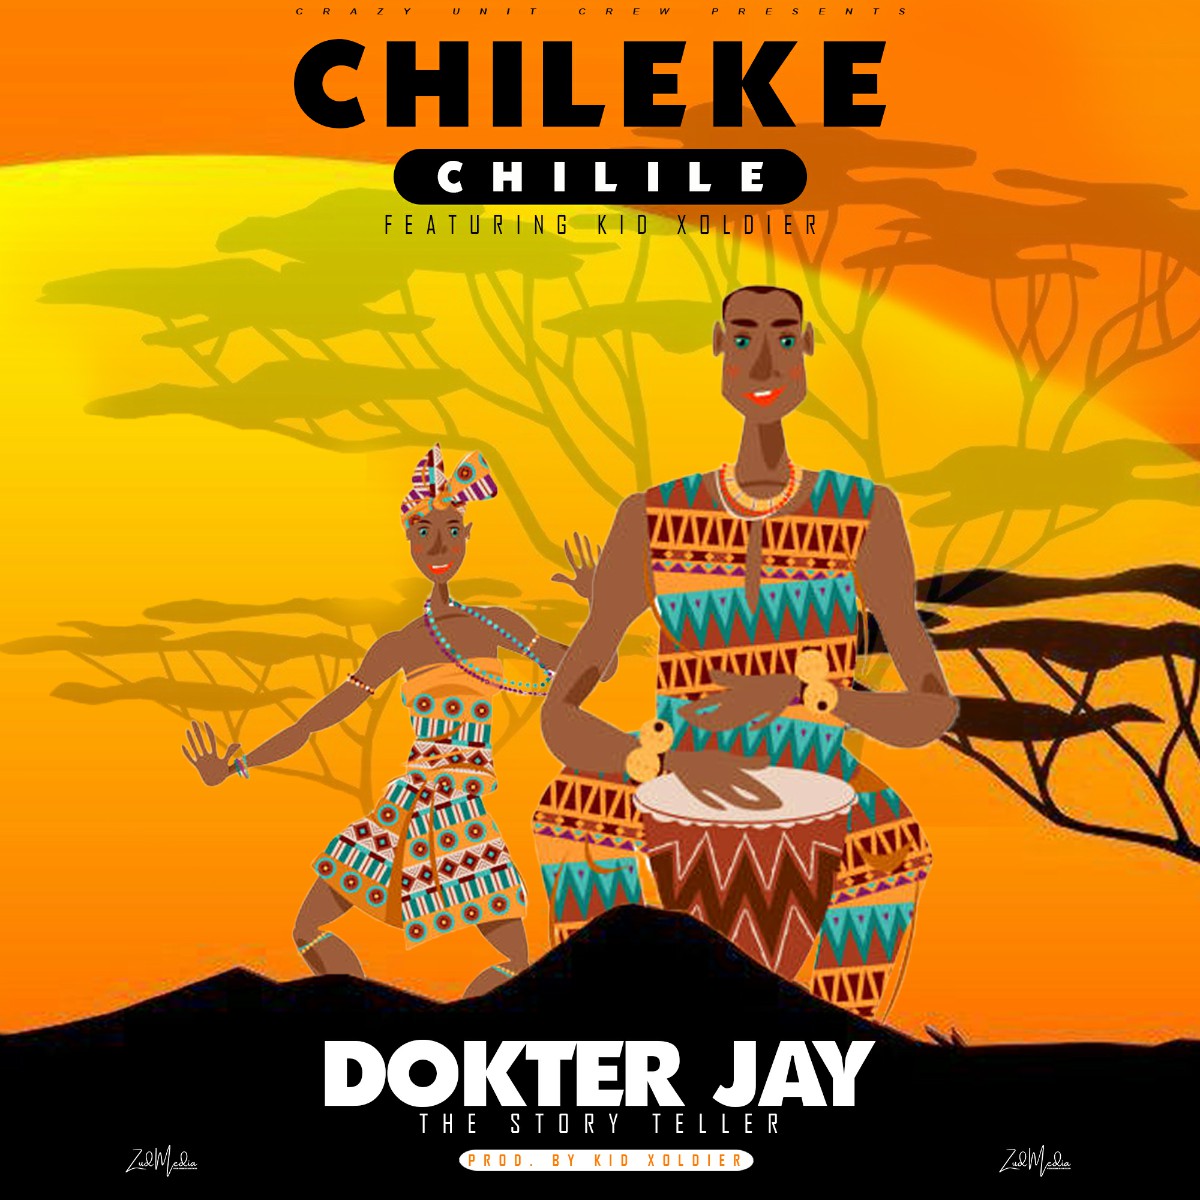 Dokter Jay ft. Kid Xoldier - Chileke Chilile